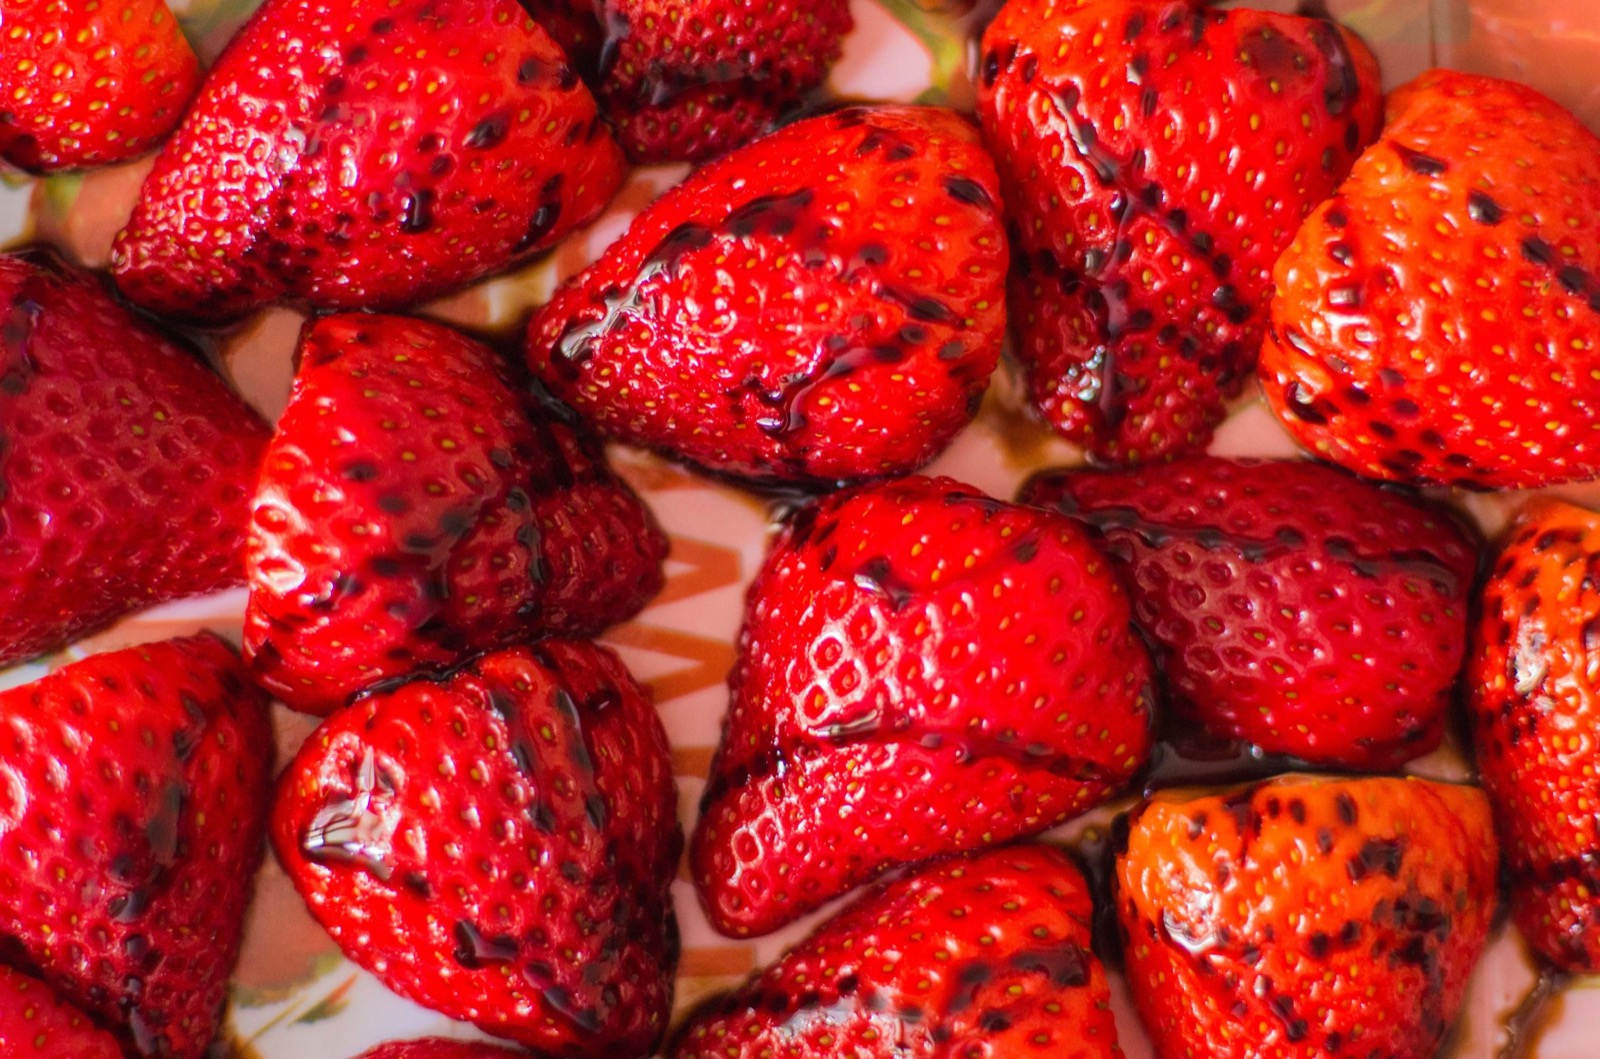 Strawberries with balsamic vinegar